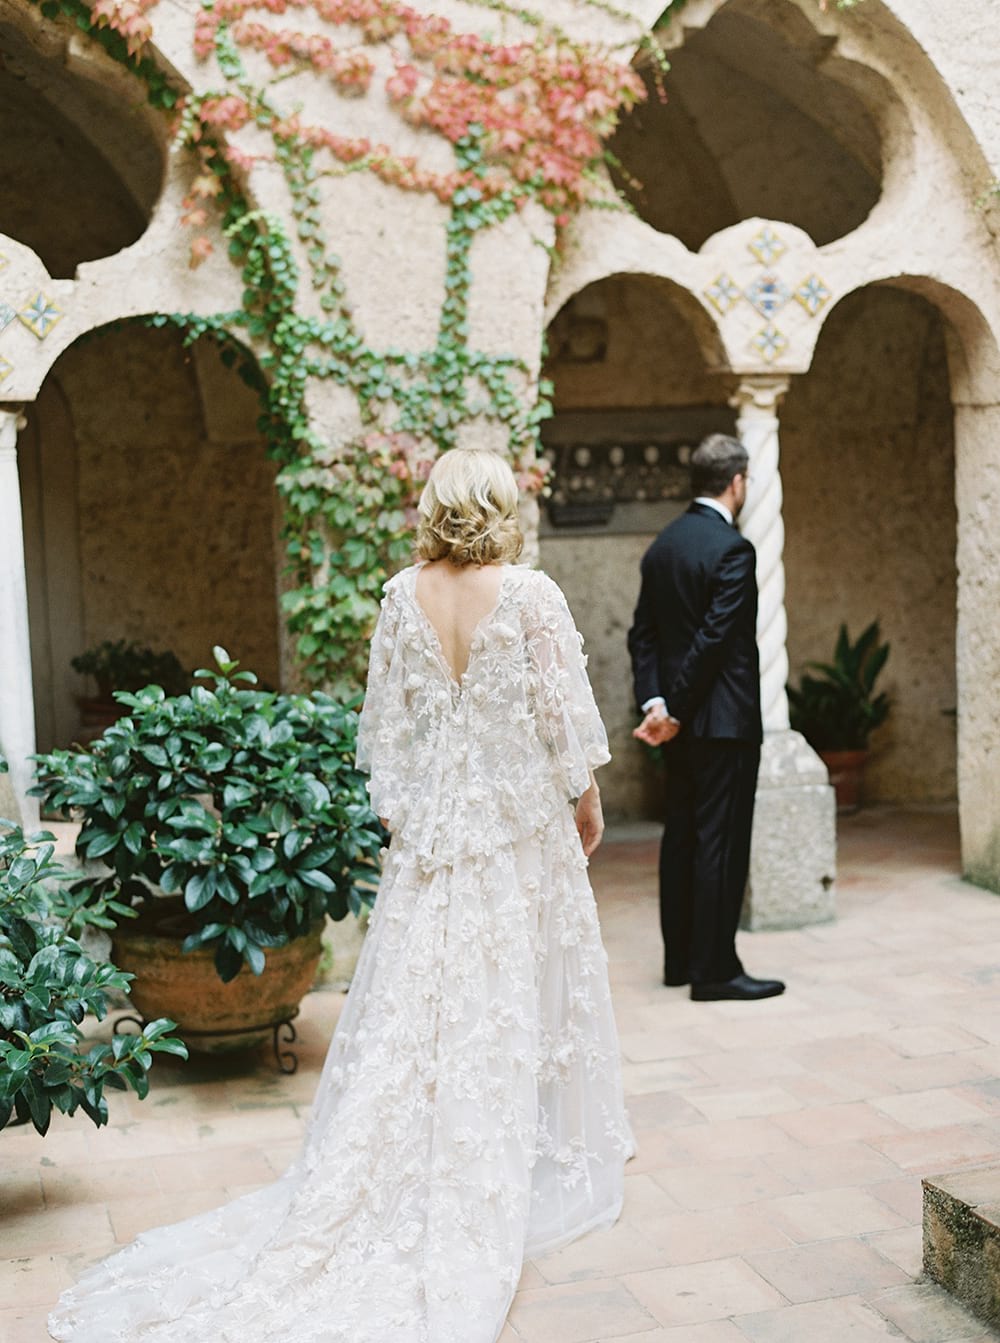 wedding villa cimbrone ravello, italy bride and groom first look photos